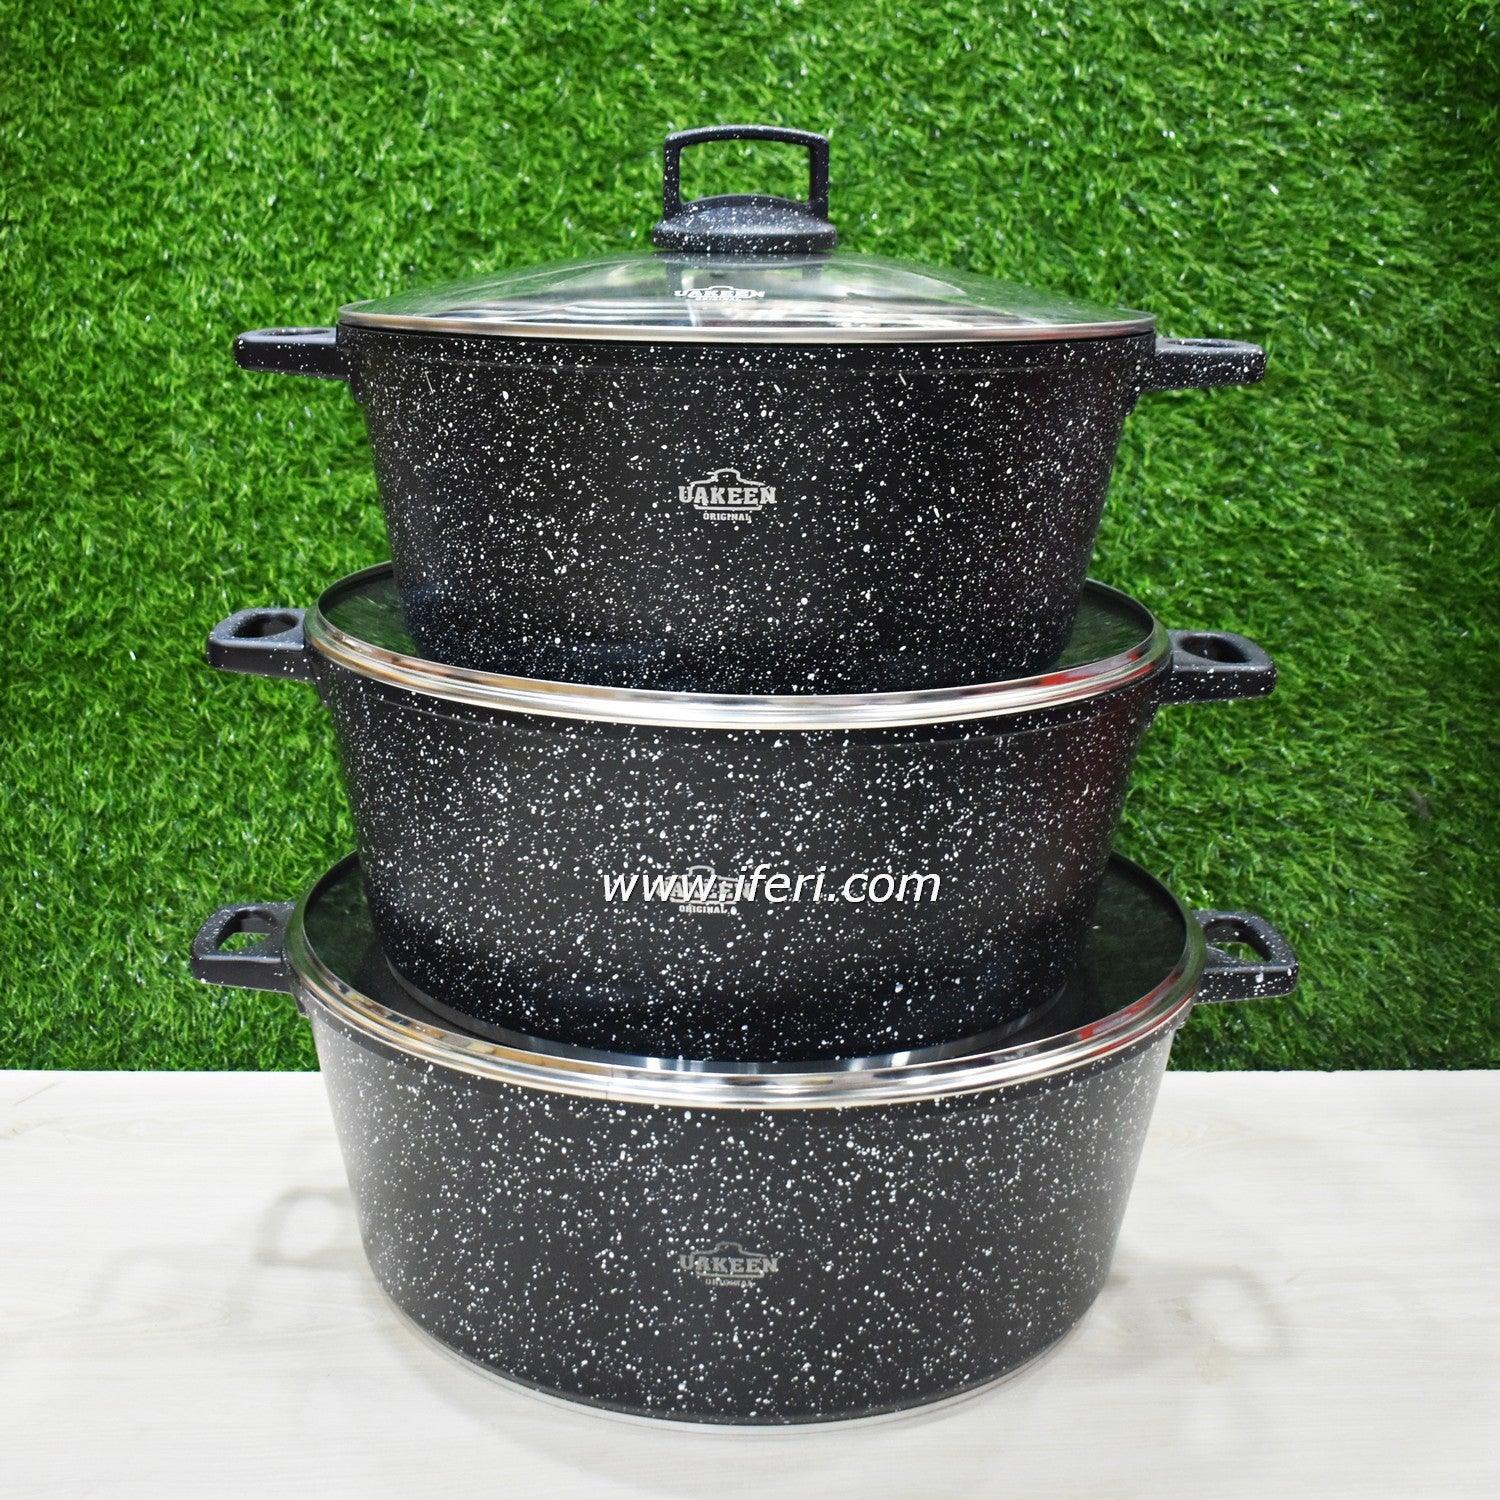 3 pcs Non Stick Granite Coated Cookware Set with Lid RR6140 Price in Bangladesh - iferi.com